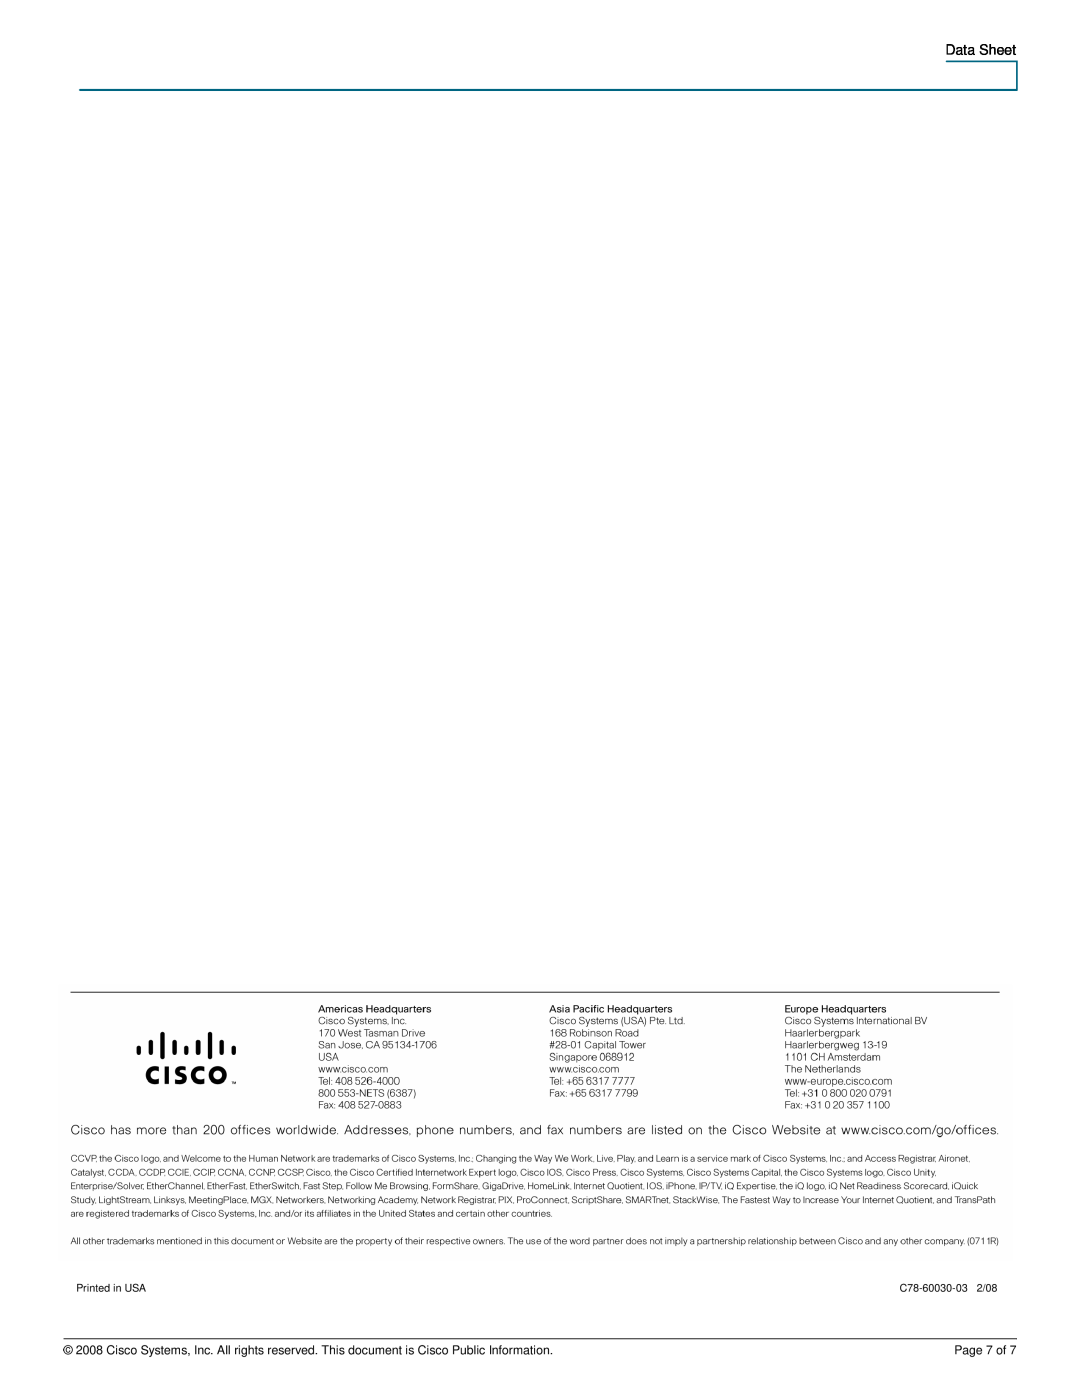 Cisco Systems CUVAV224BUN manual Data Sheet, C78-60030-03 2/08, Page 7 of 